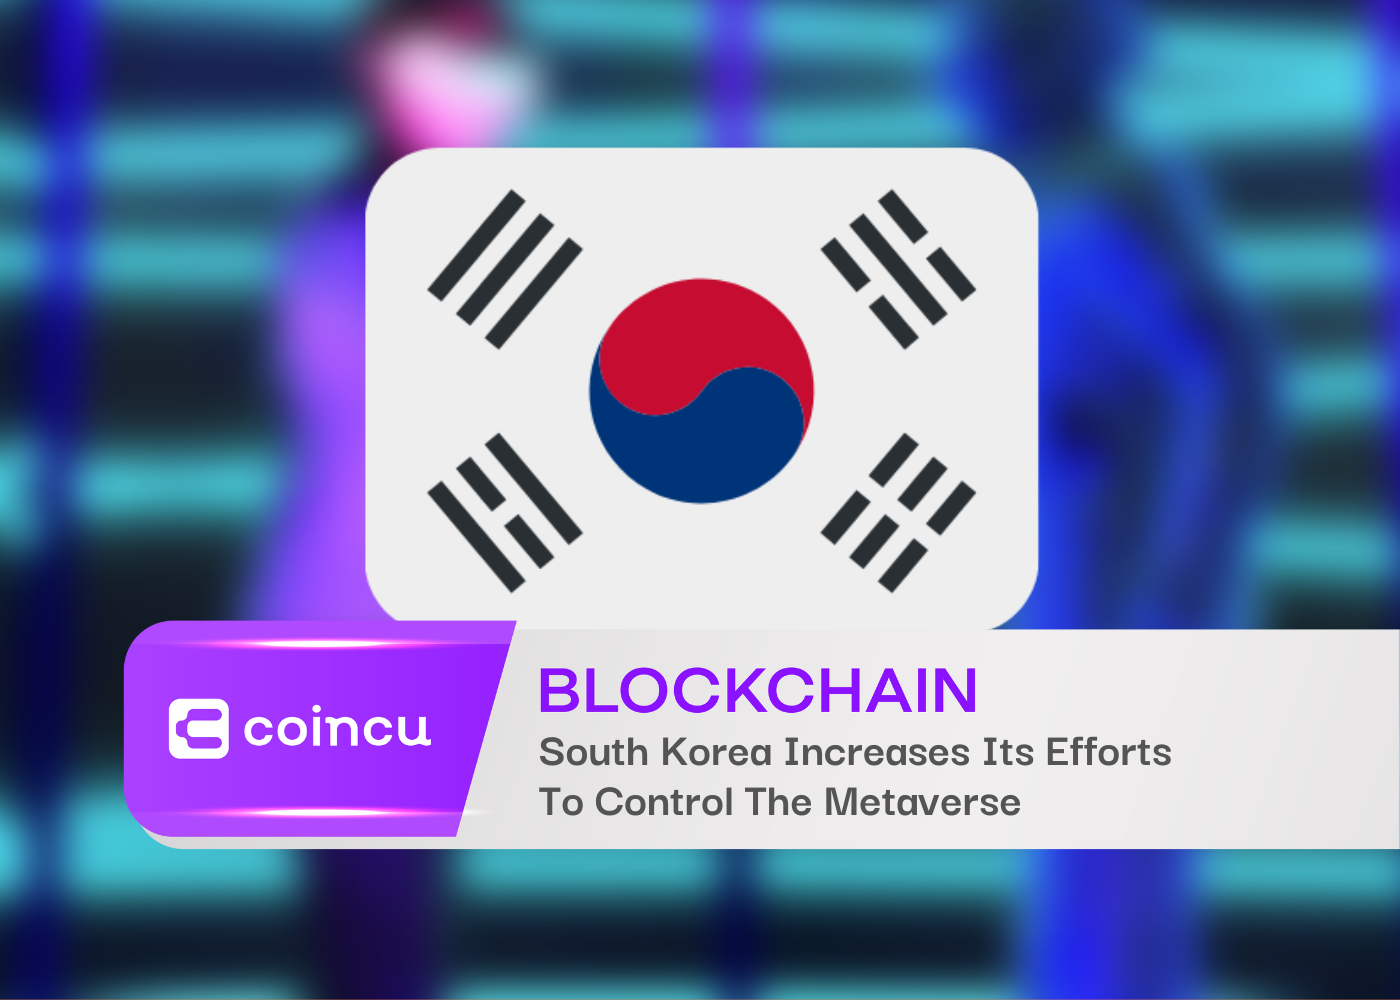 South Korea Increases Its Efforts